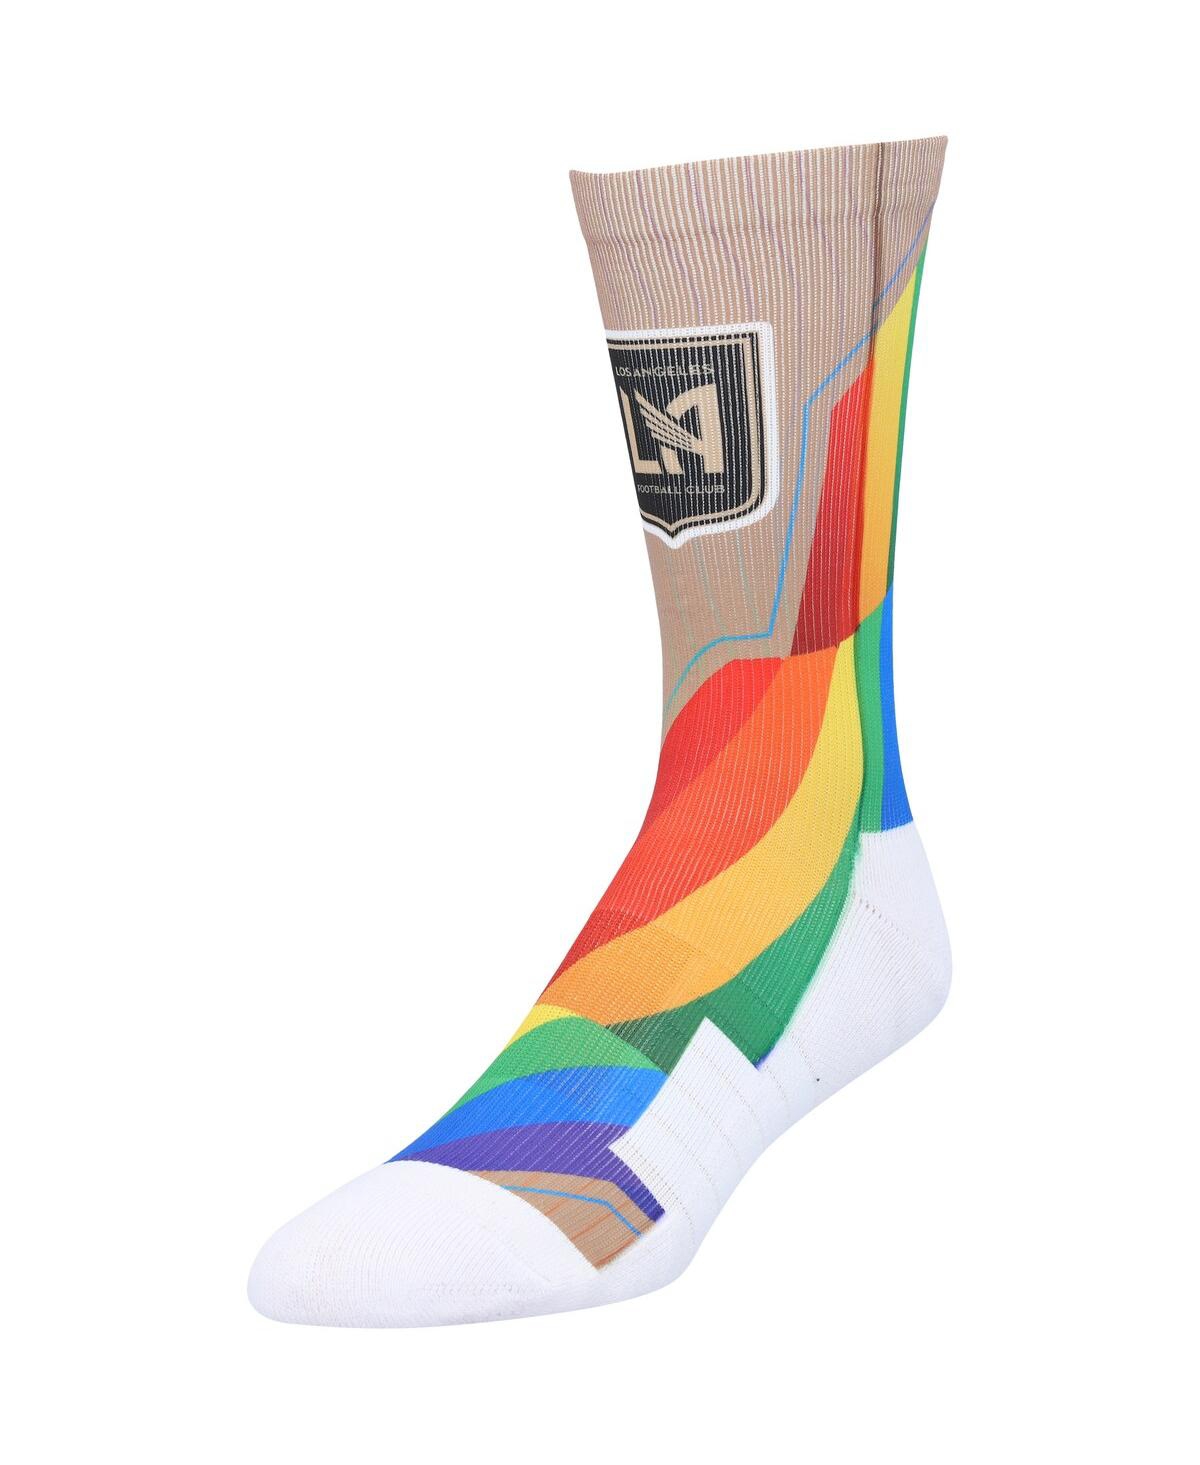 Men's and Women's Strideline Lafc Pride Crew Socks - Multi